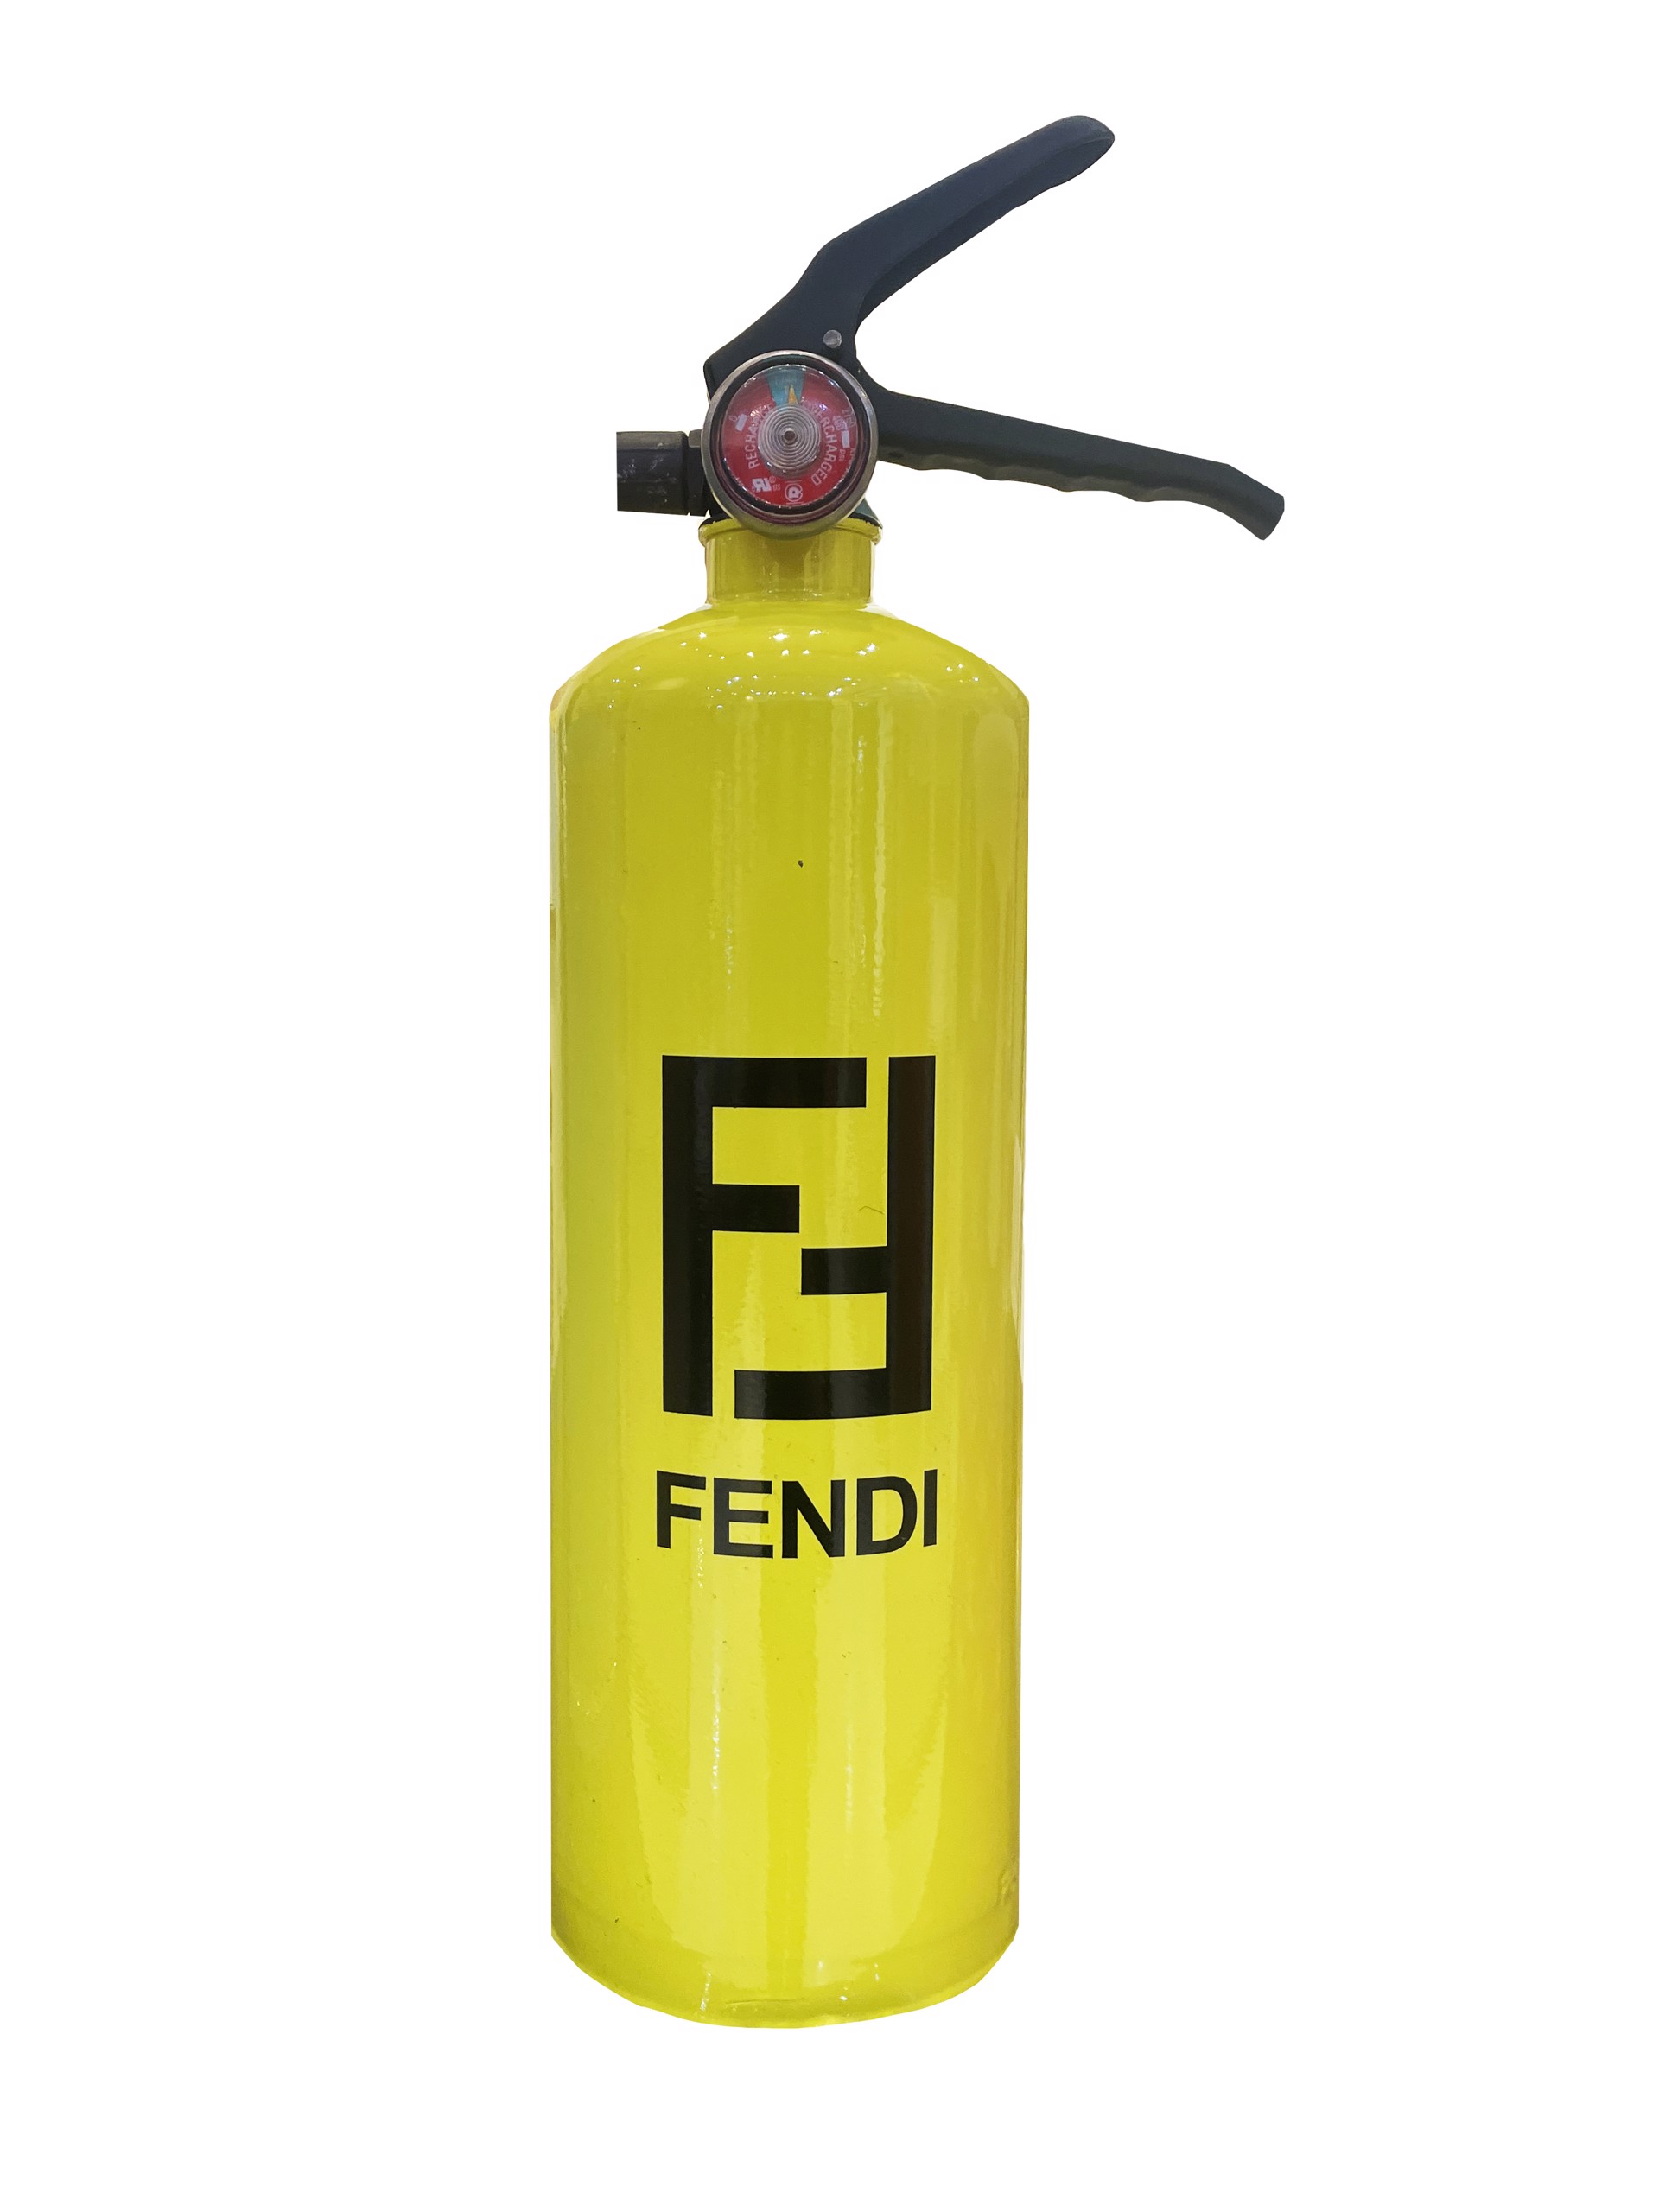 Fendi Fire Extinguisher by David Mir